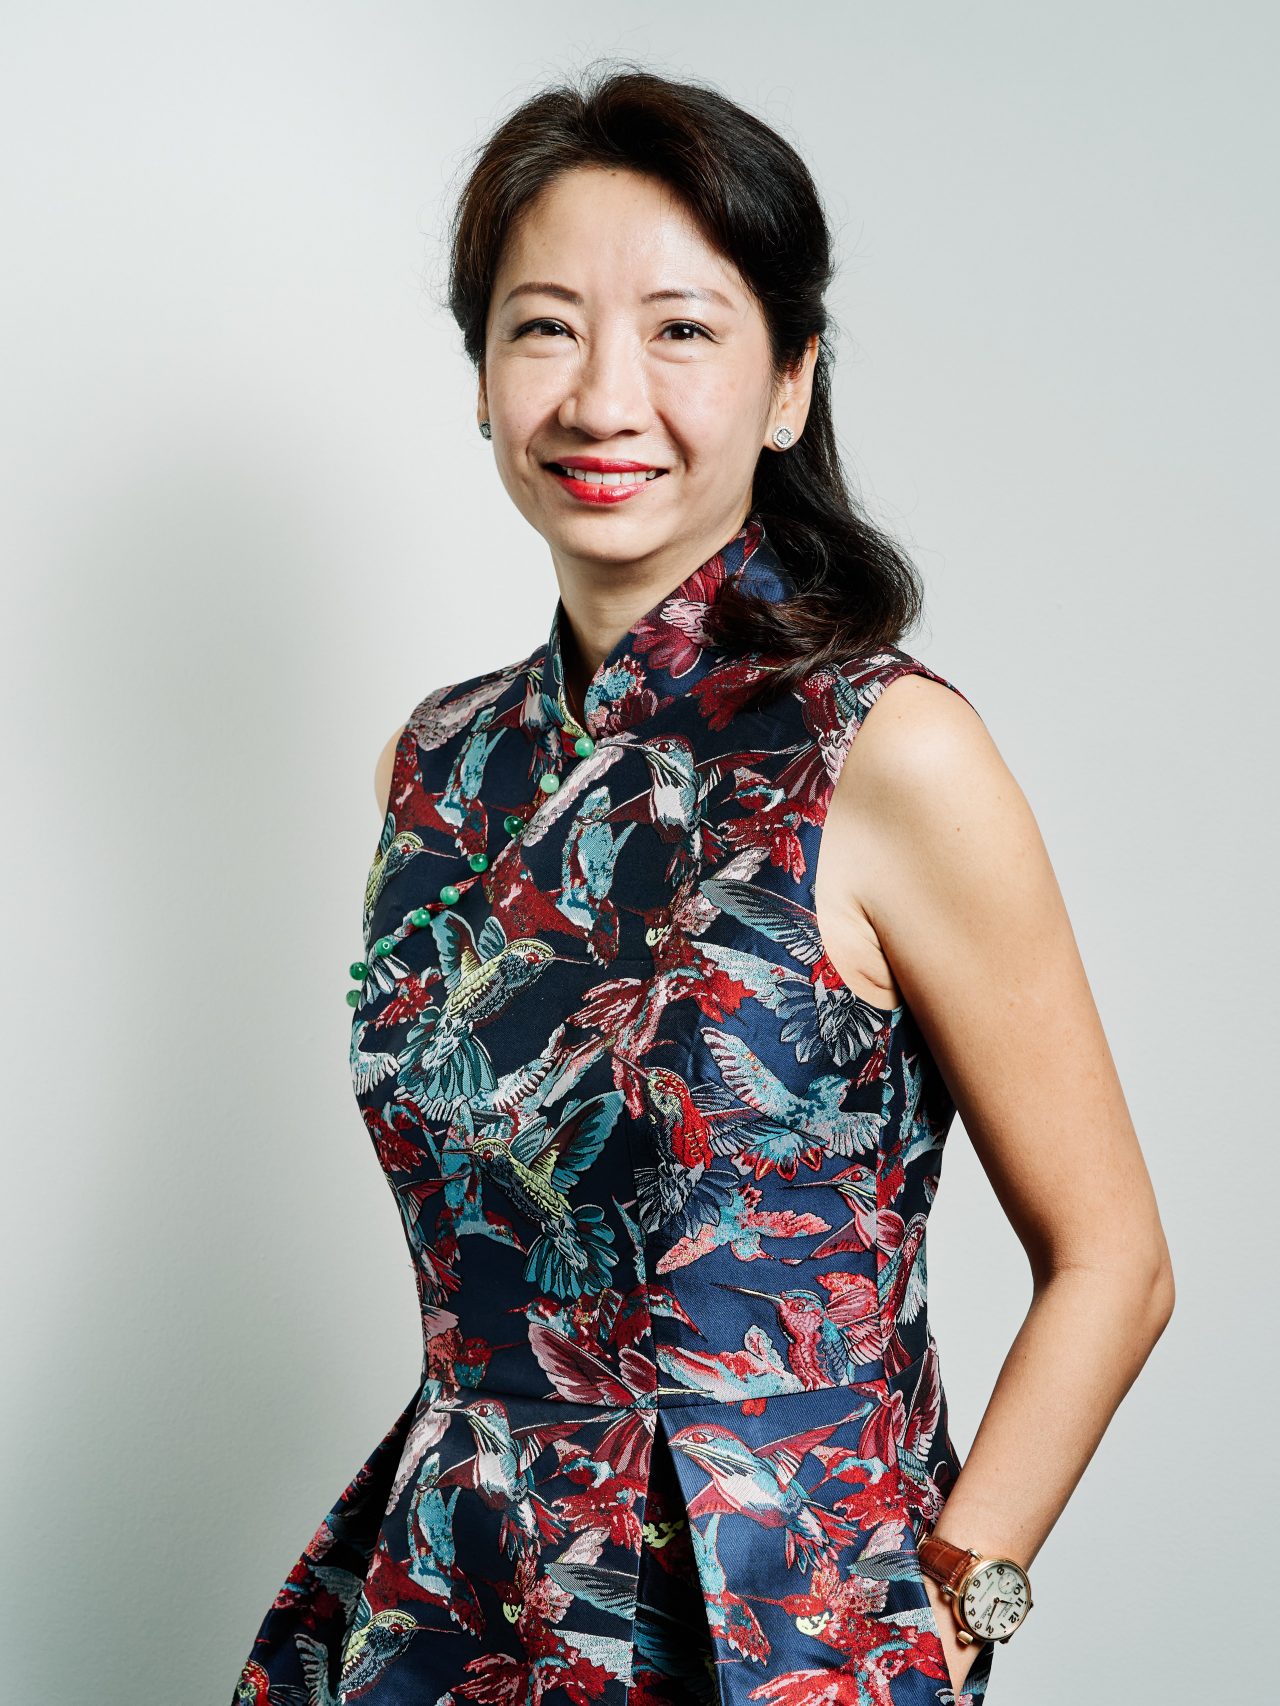 Image: Jacqueline Chua, President of the Financial Women's Association Singapore